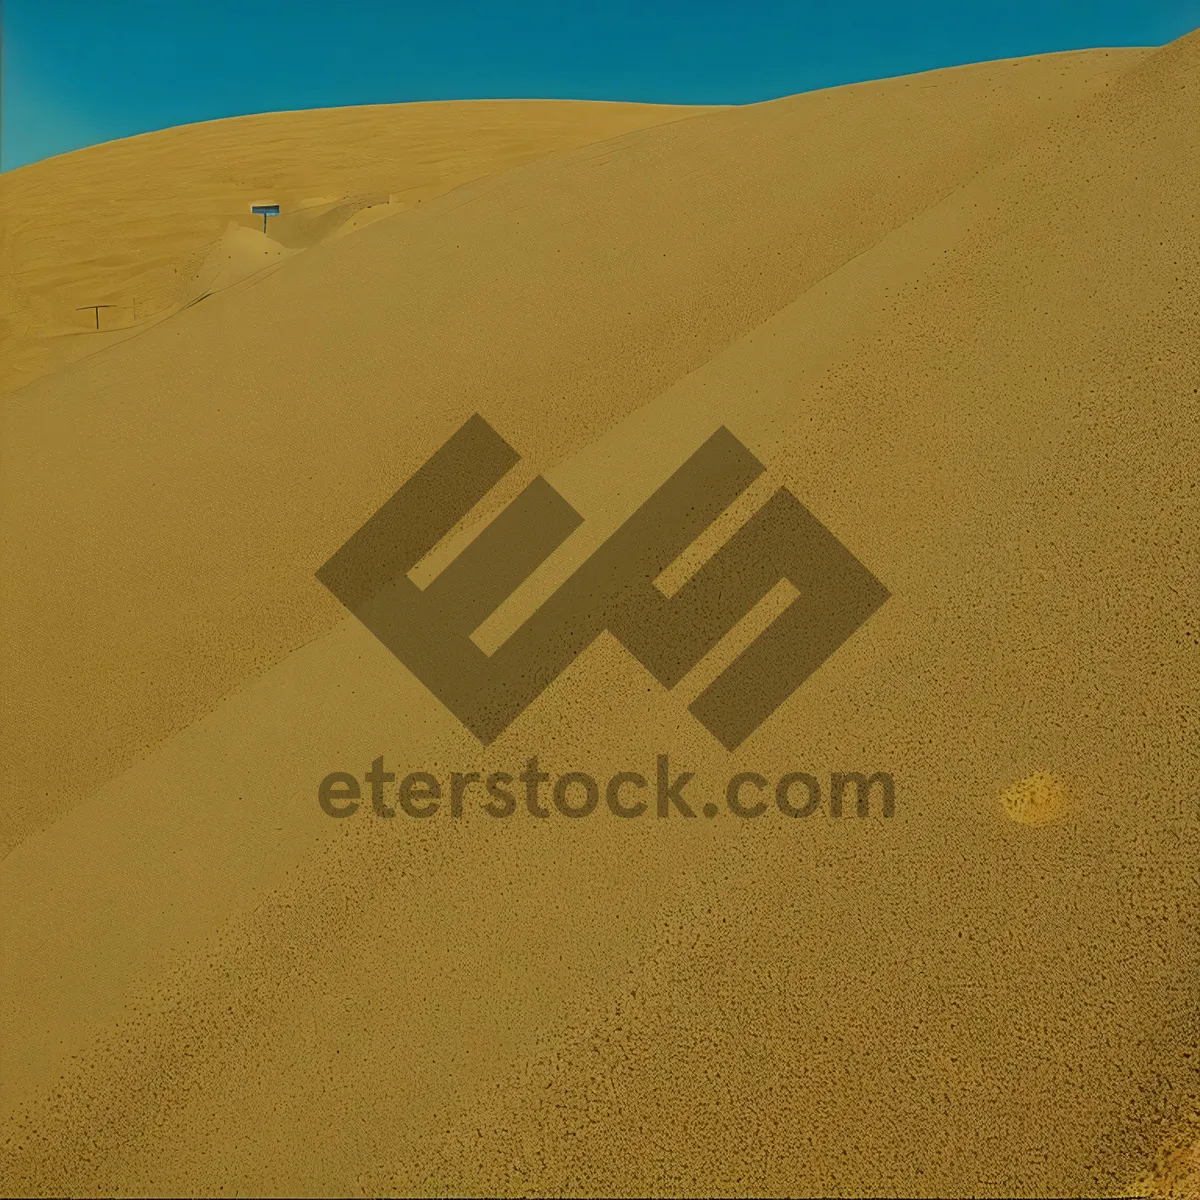 Picture of Sun-kissed Moroccan Desert Dunes